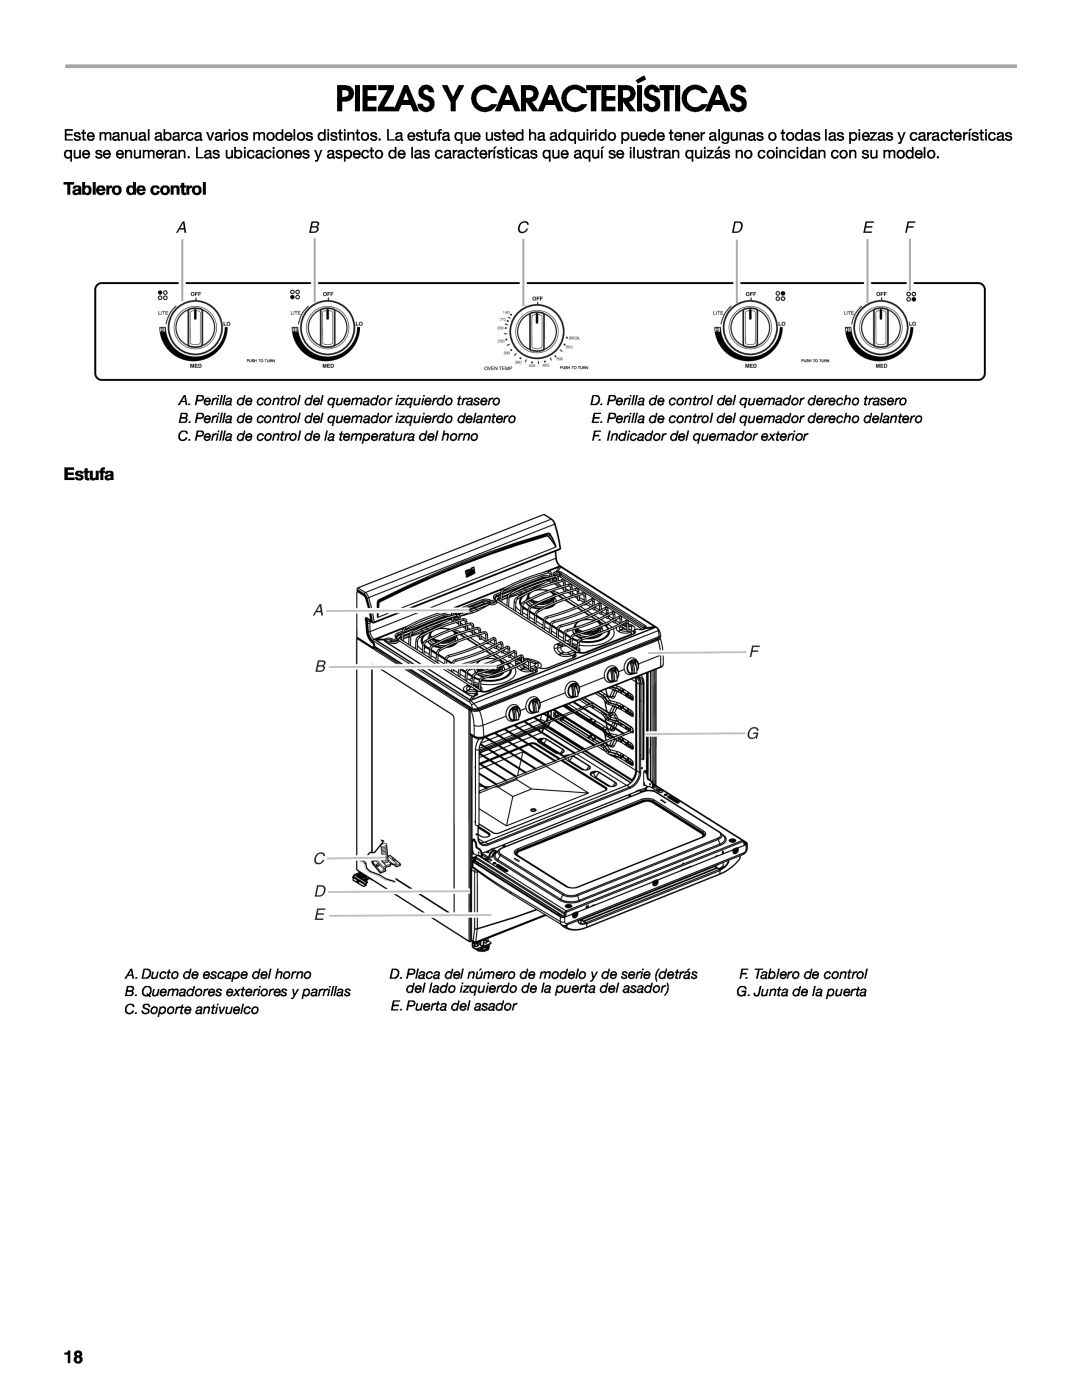 Whirlpool W10099480 manual Piezas Y Características, Tablero de control, Estufa, Abcde F, A F B G C D E 